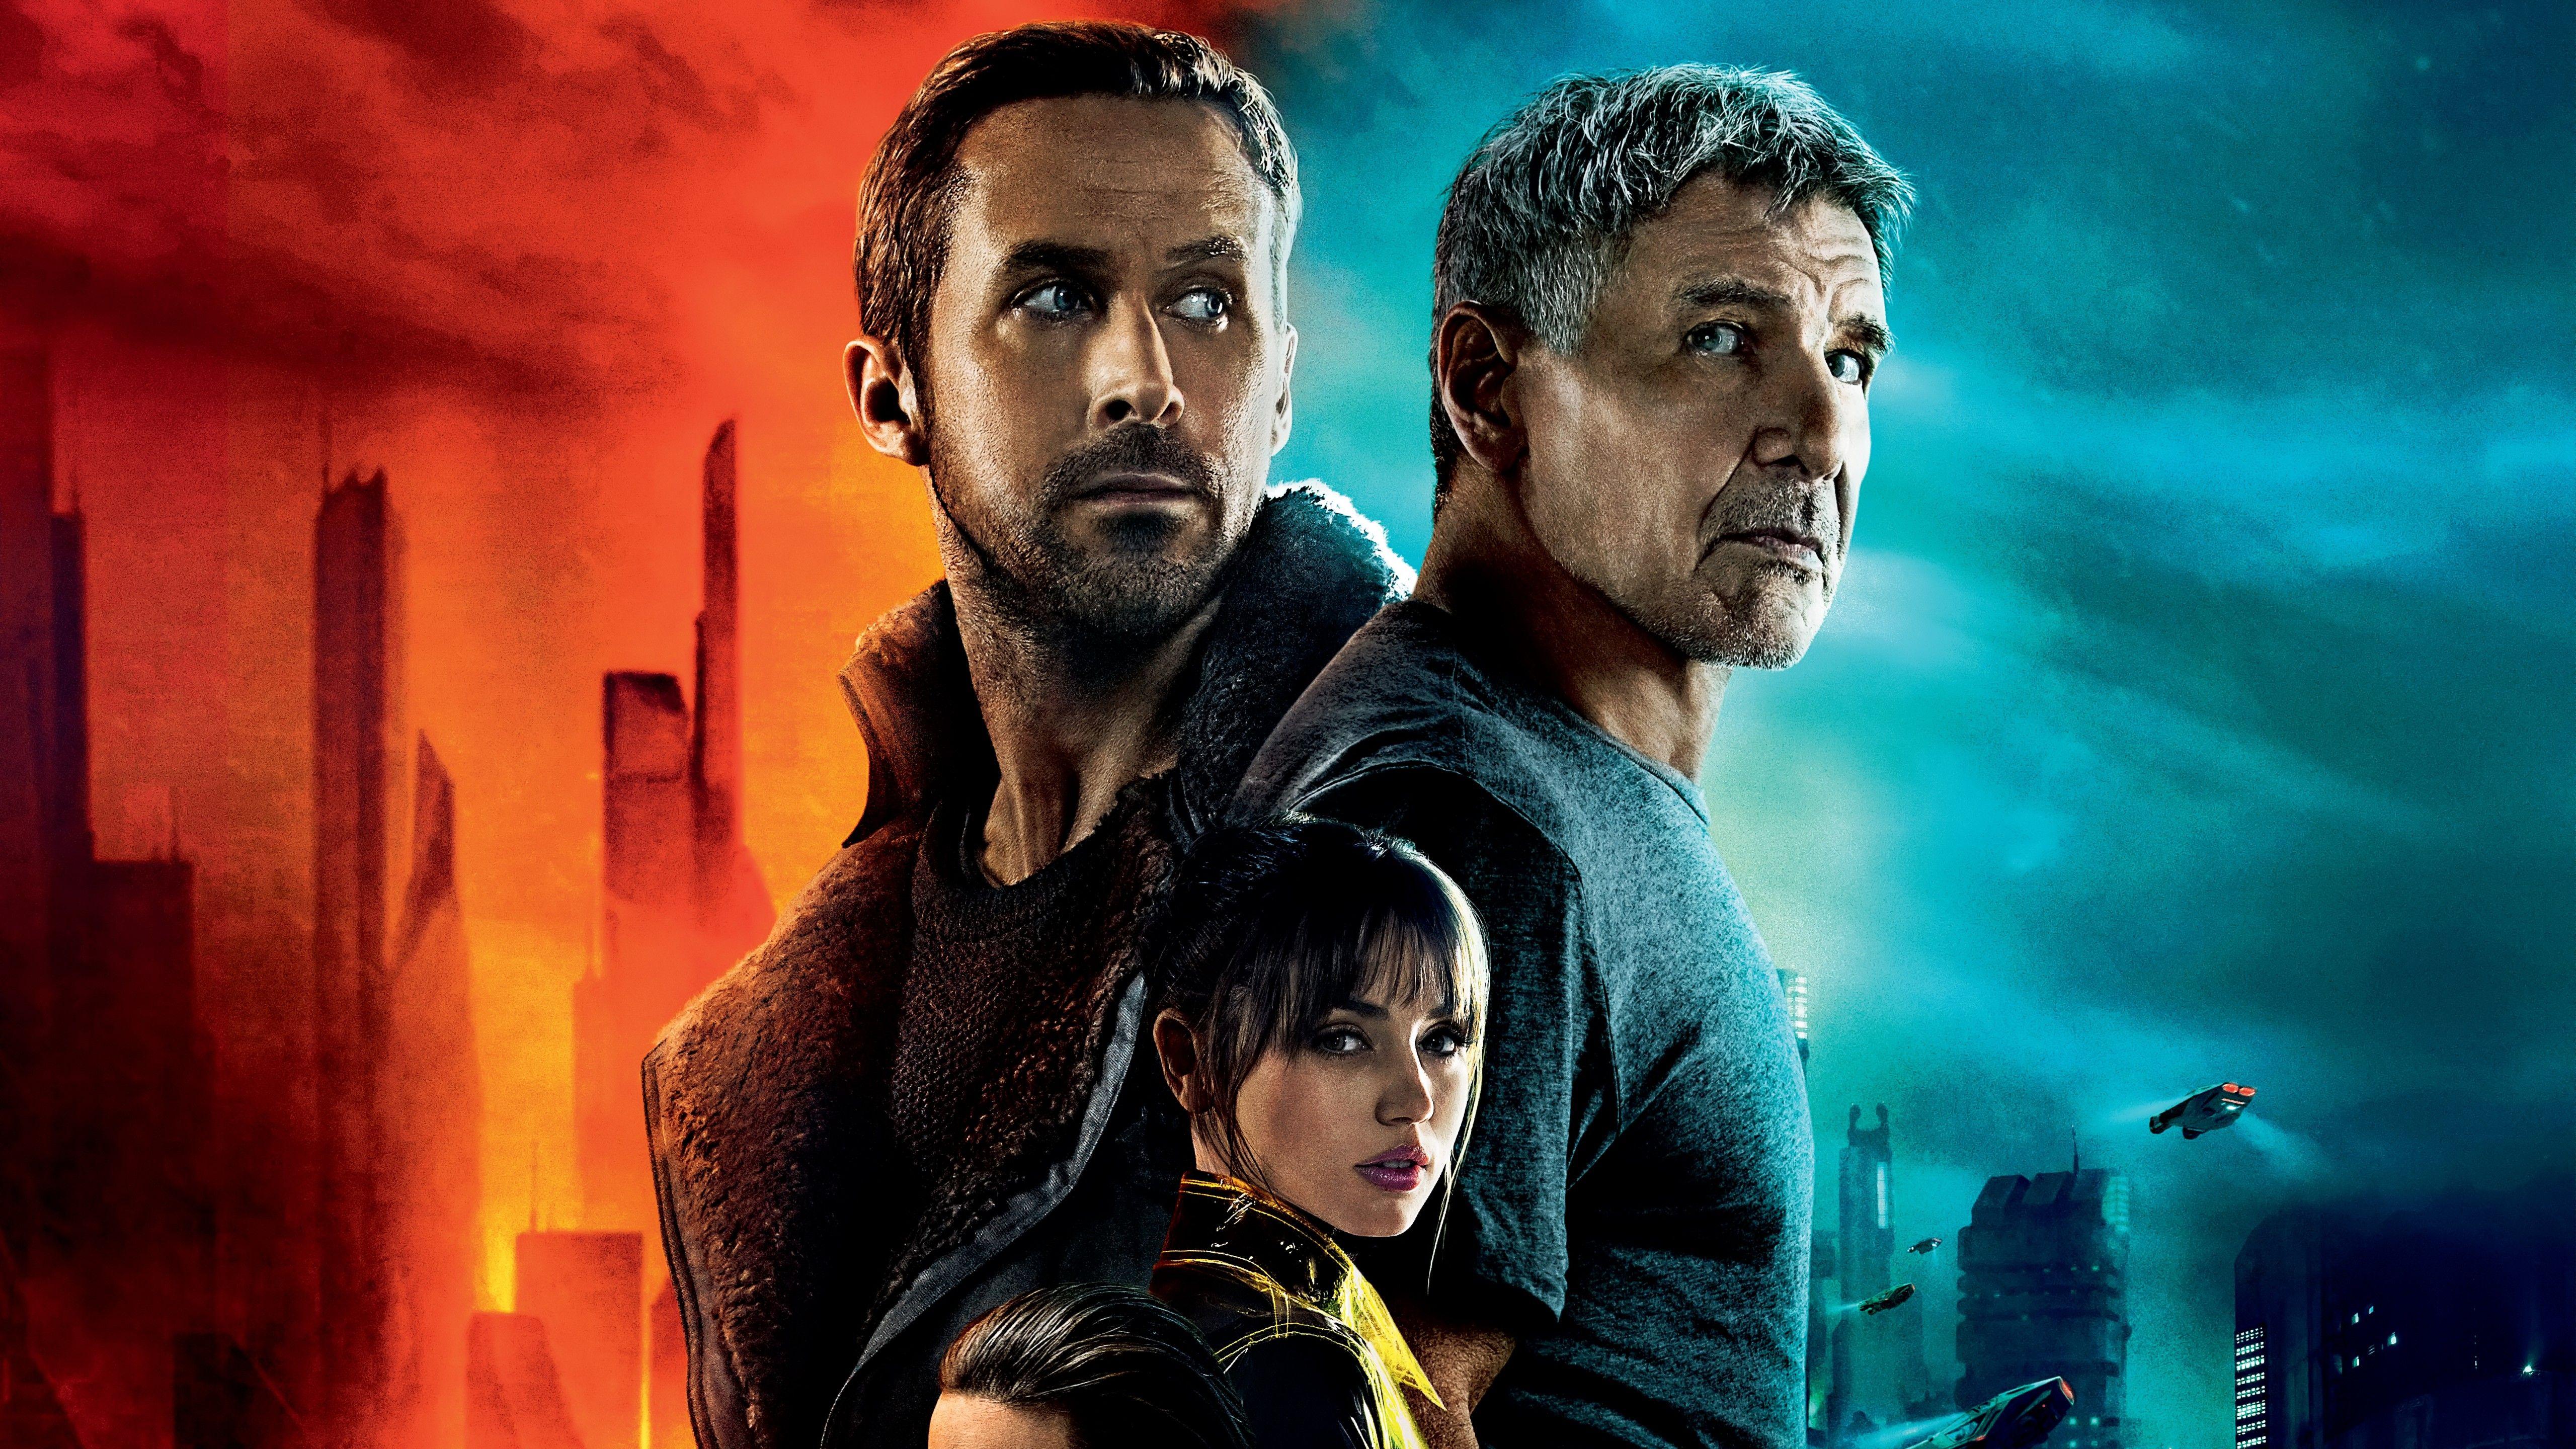 Wallpaper Blade Runner HD, 4K, 8K, Movies